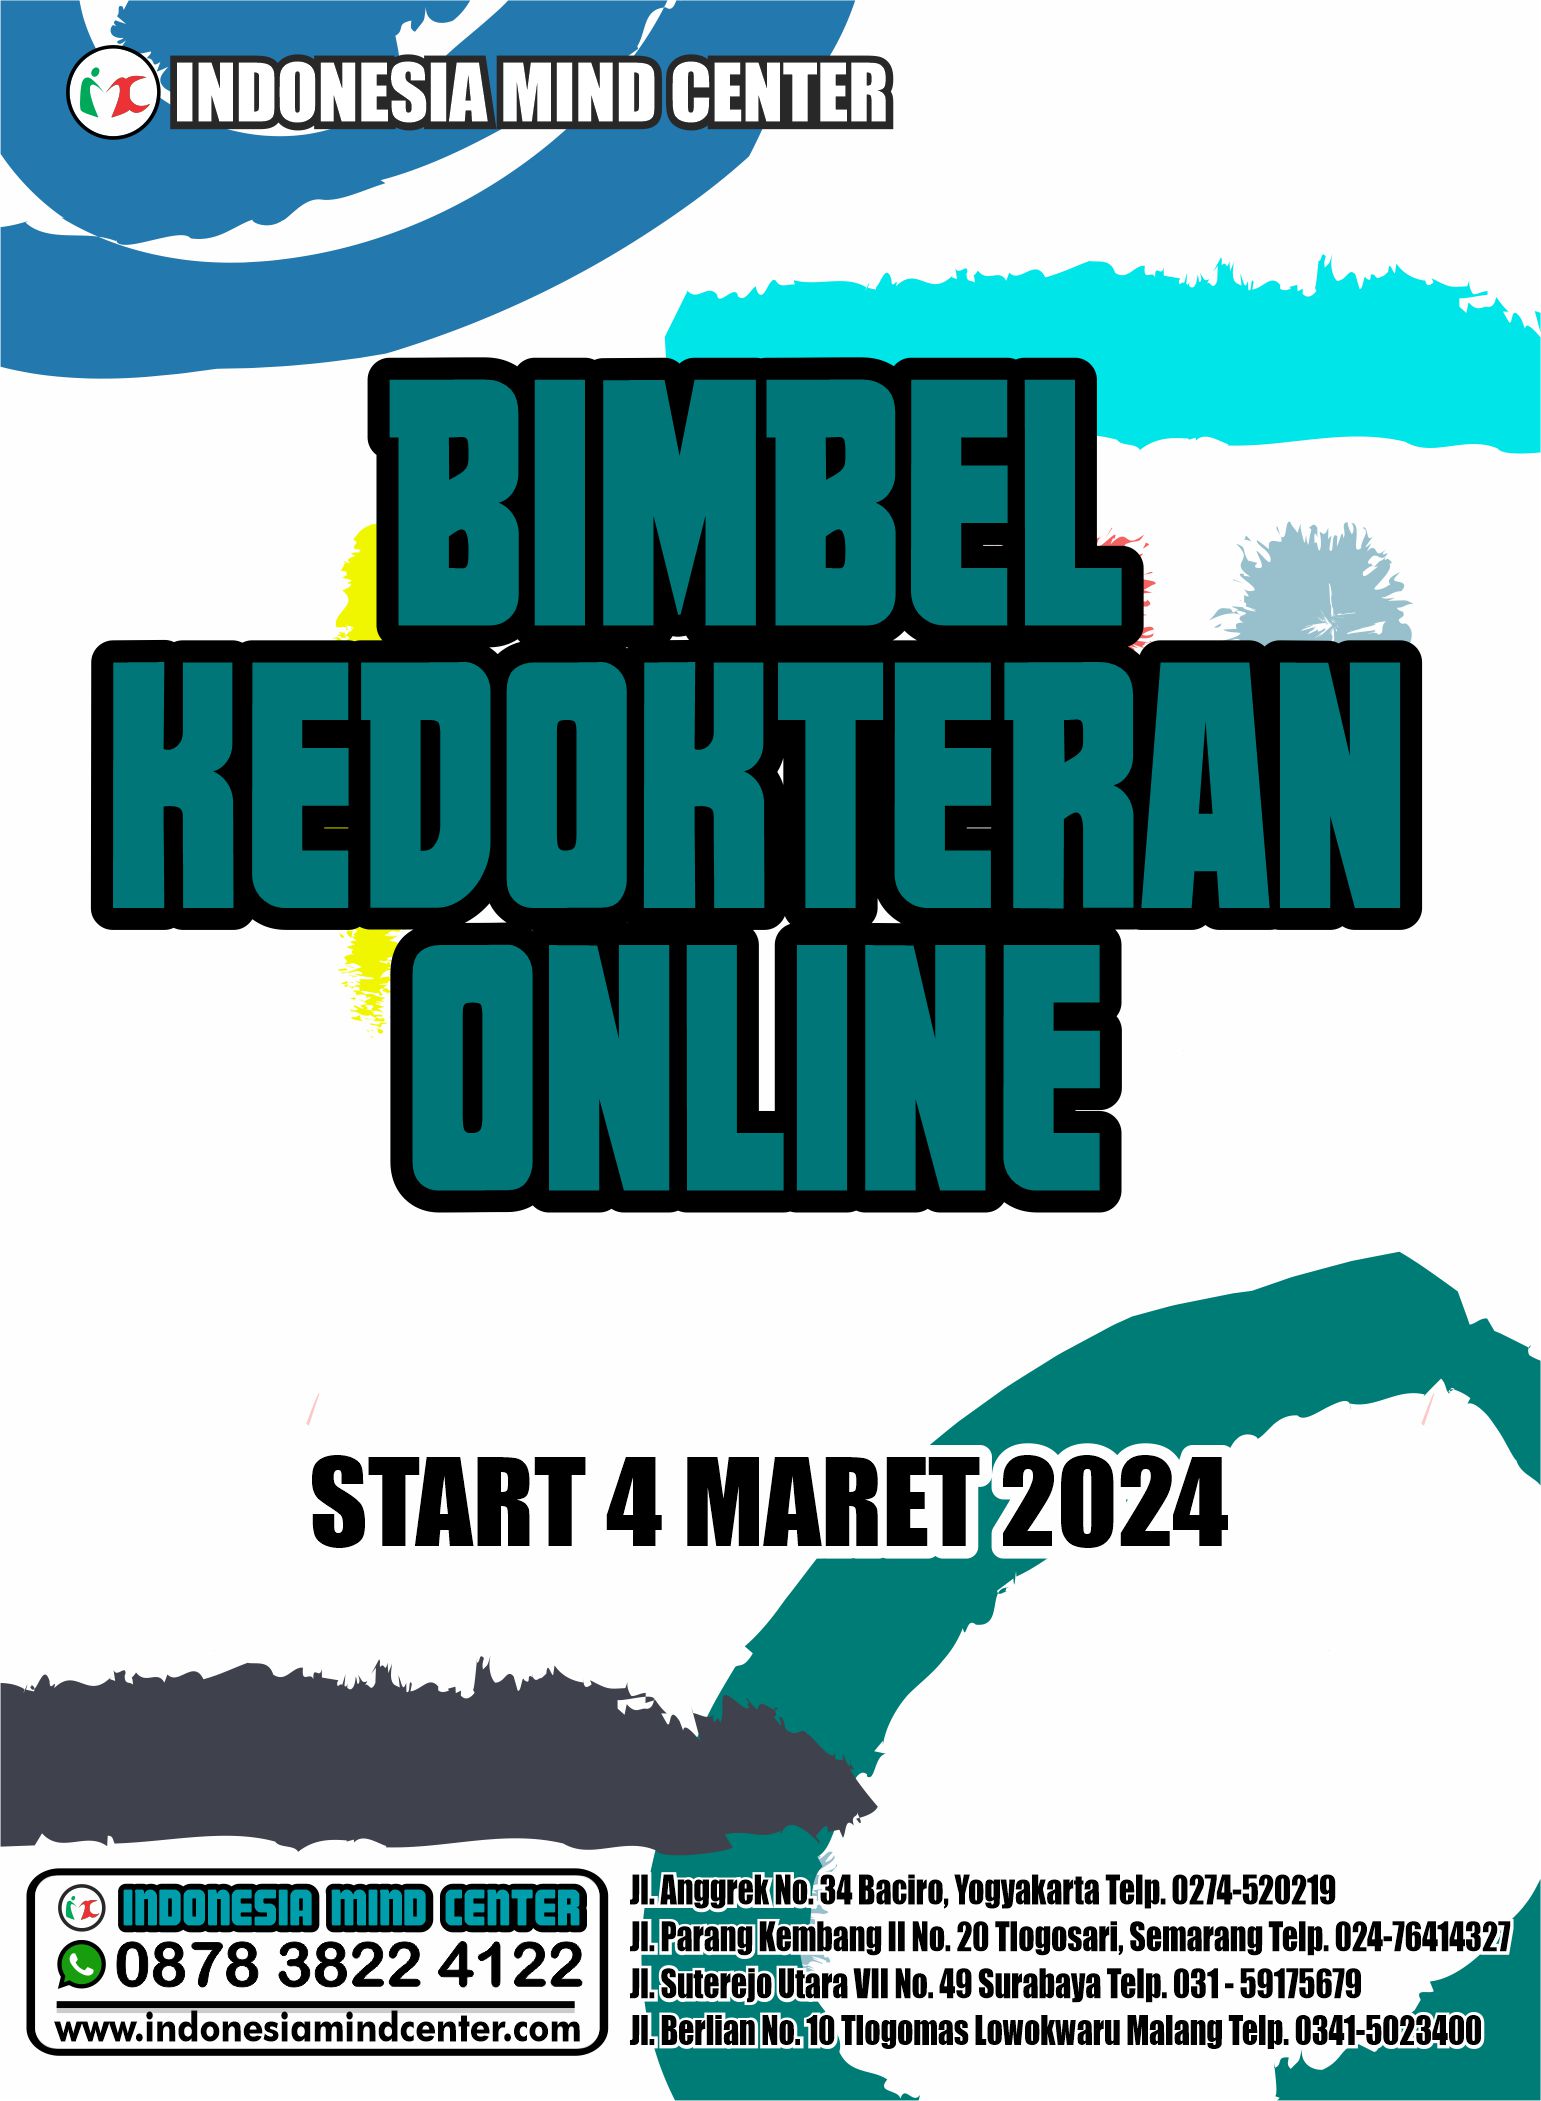 2.BIMBEL KEDOKTERAN ONLINE START 4 MARET 2024